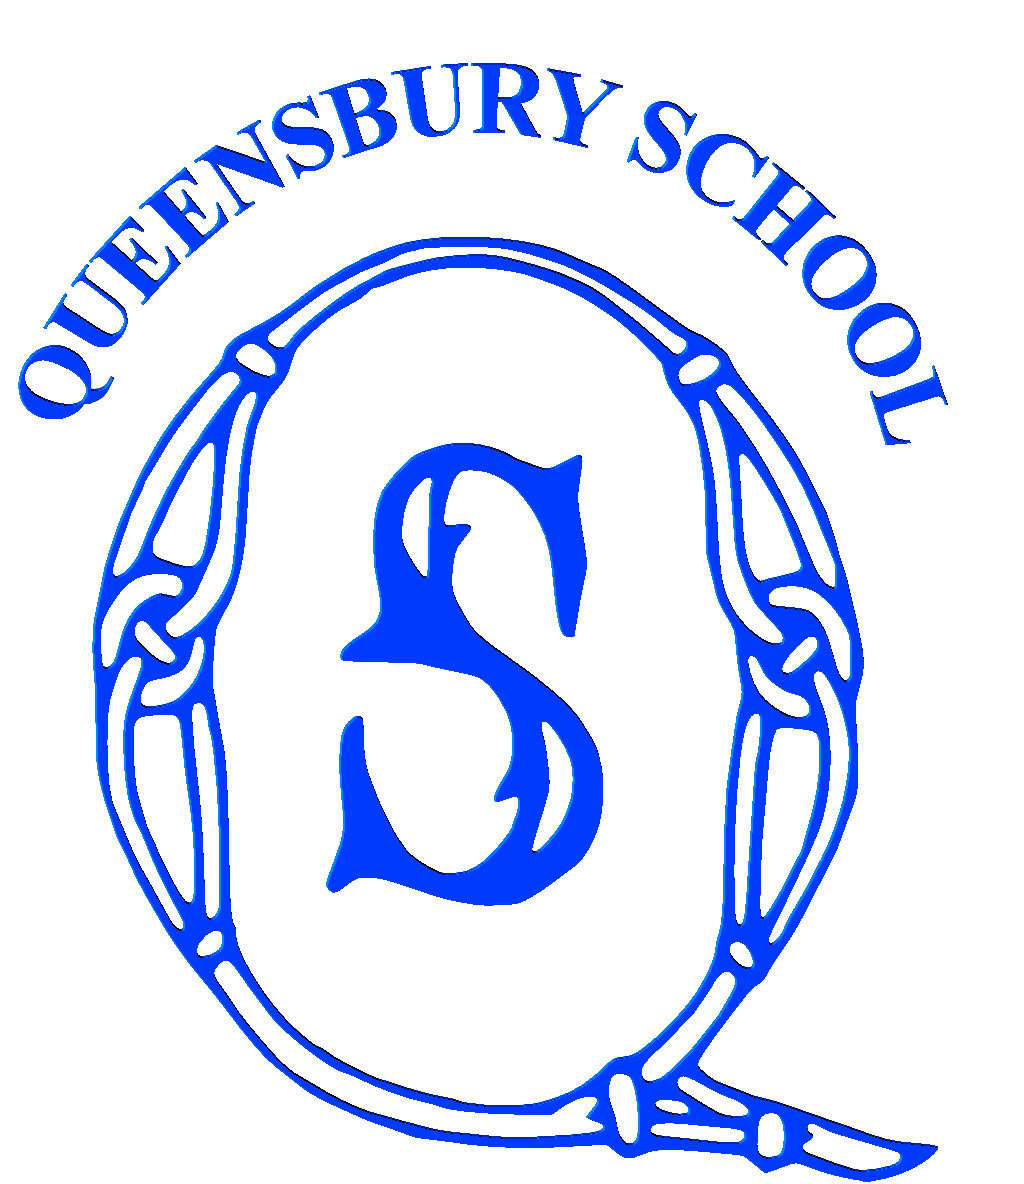 School logo refresh